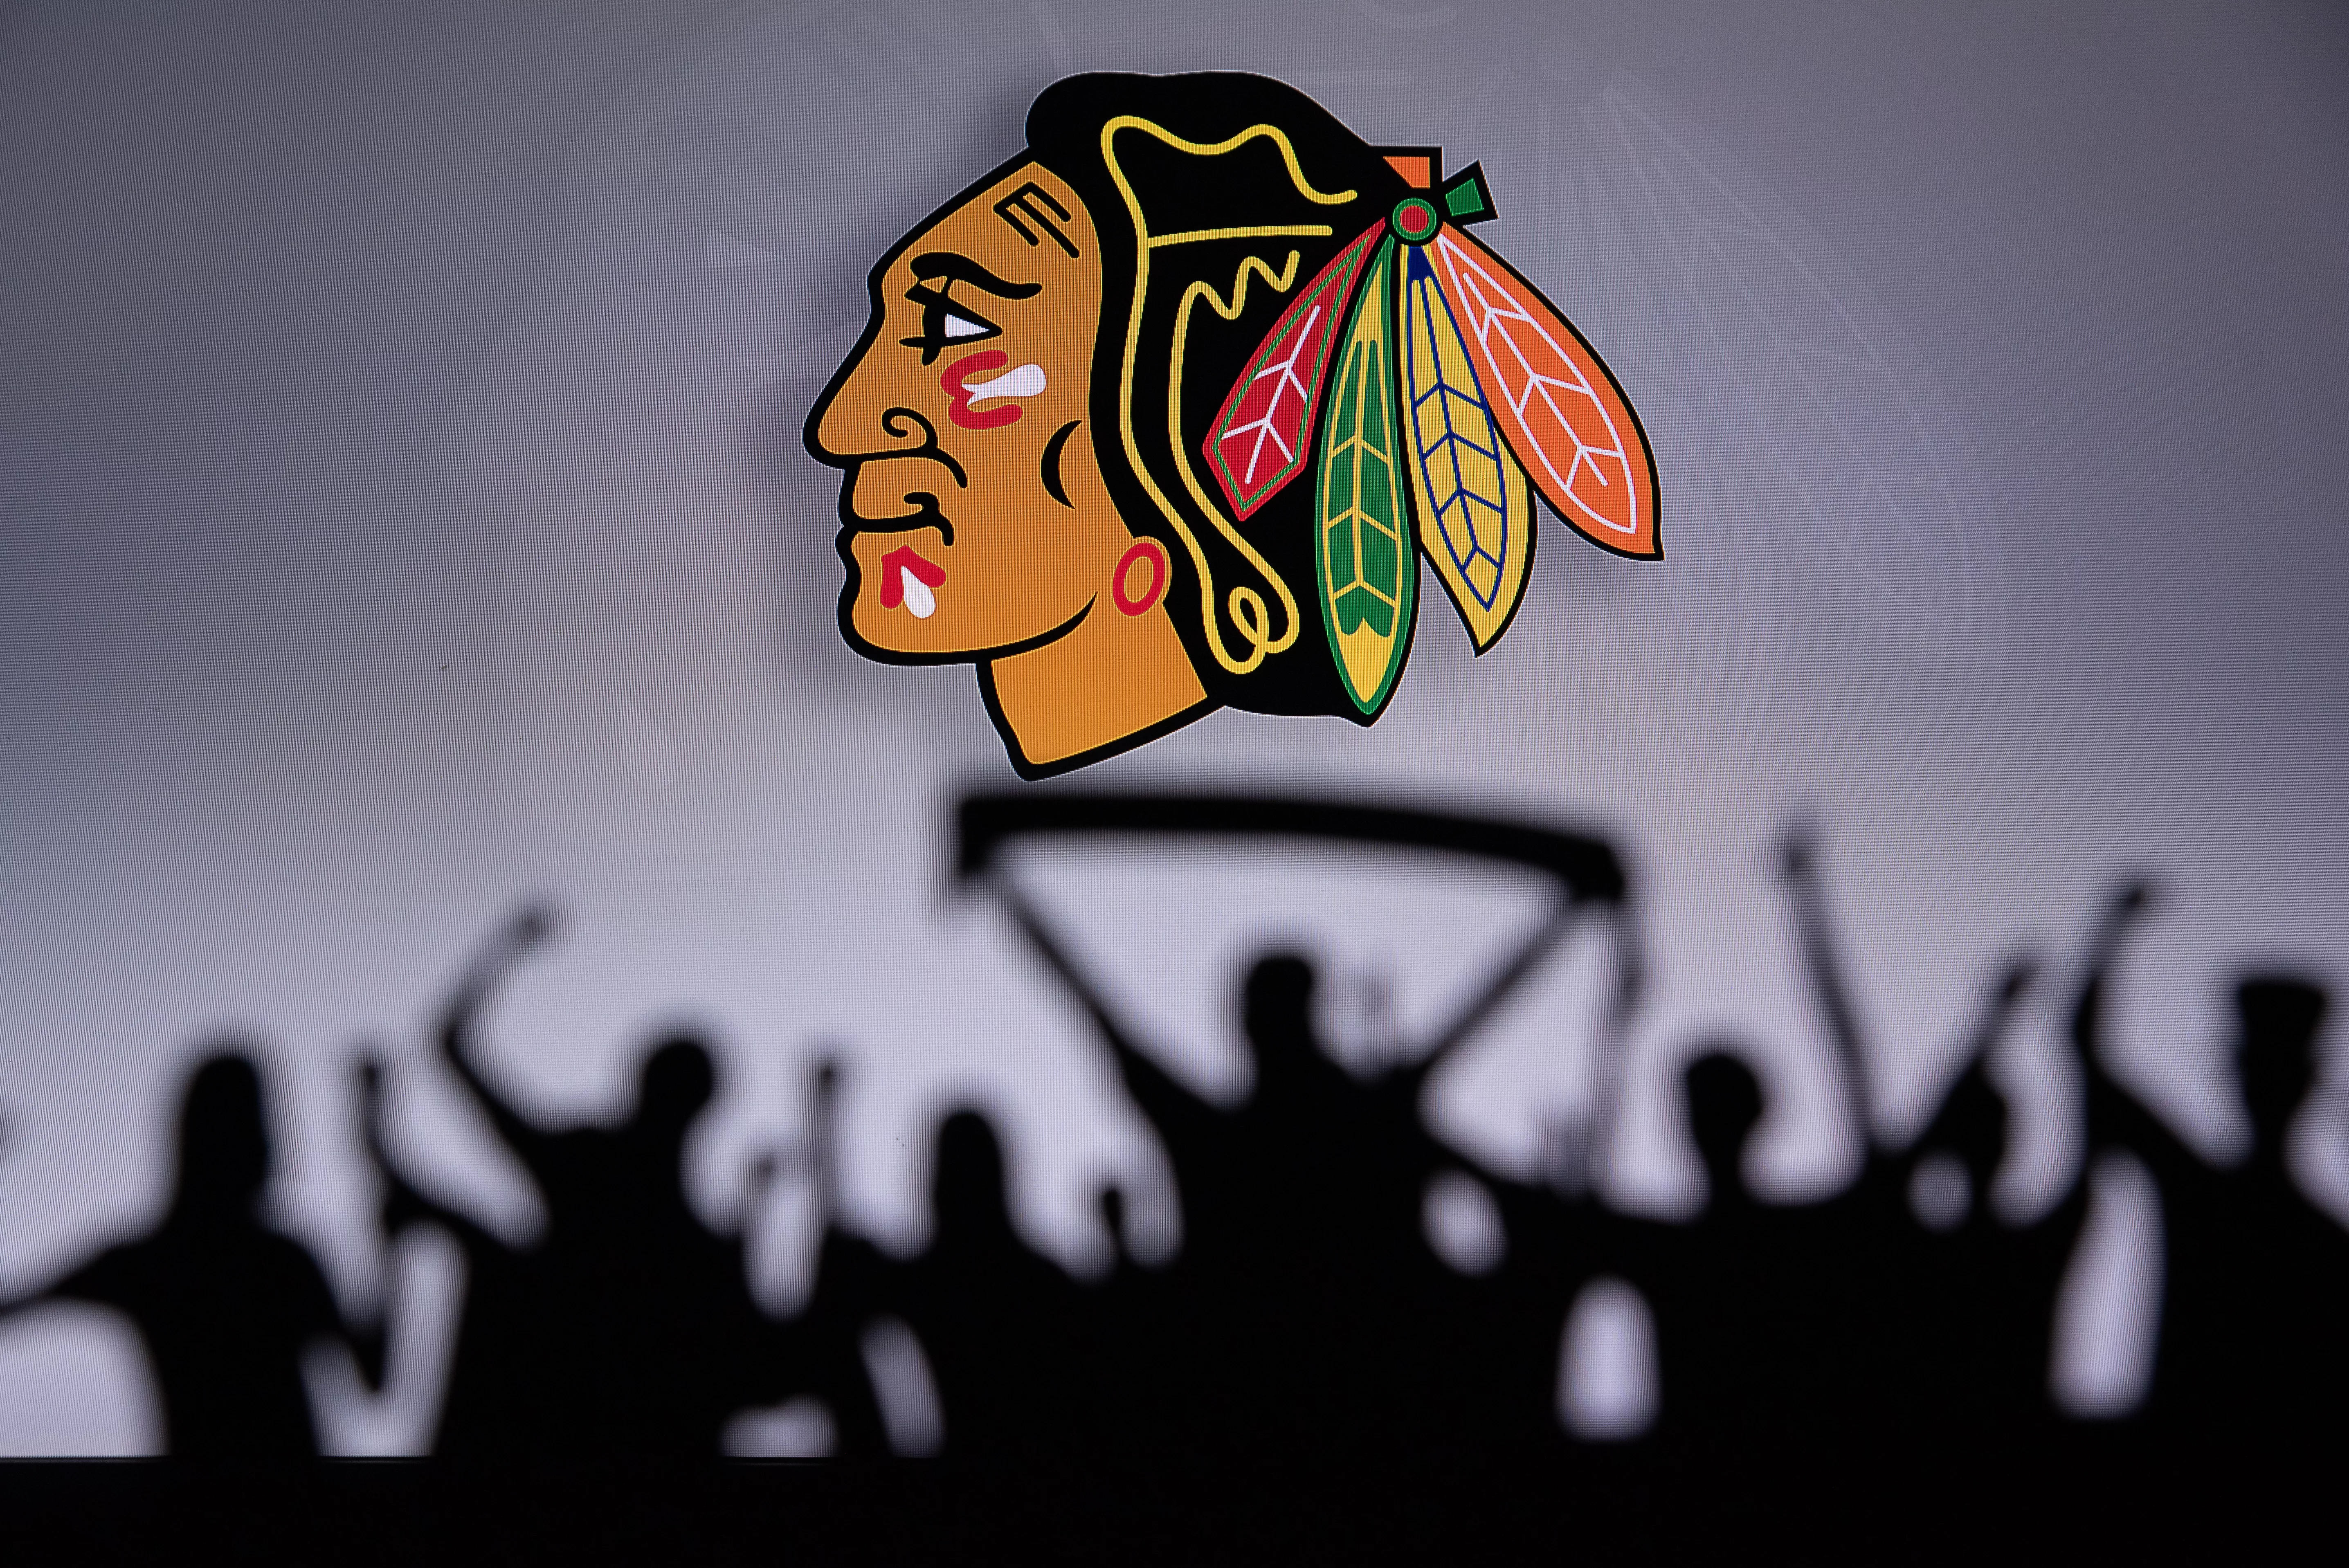 Chicago Blackhawks Hockey Team Logo Editorial Stock Image - Image